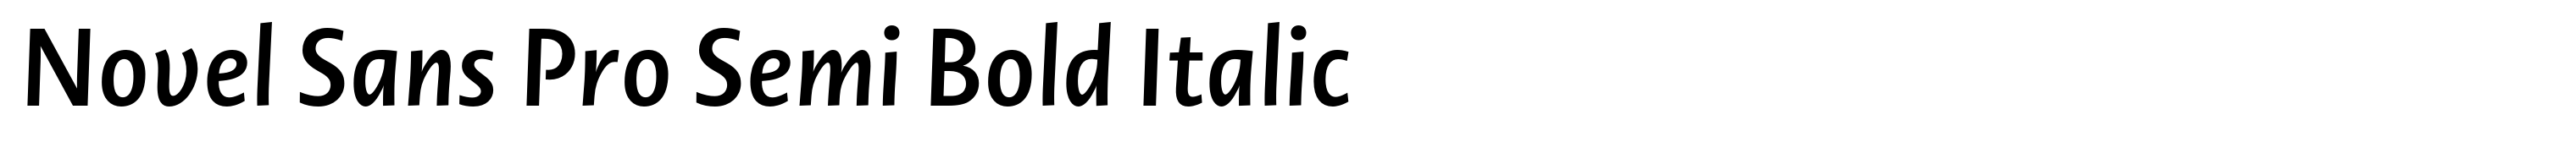 Novel Sans Pro Semi Bold Italic